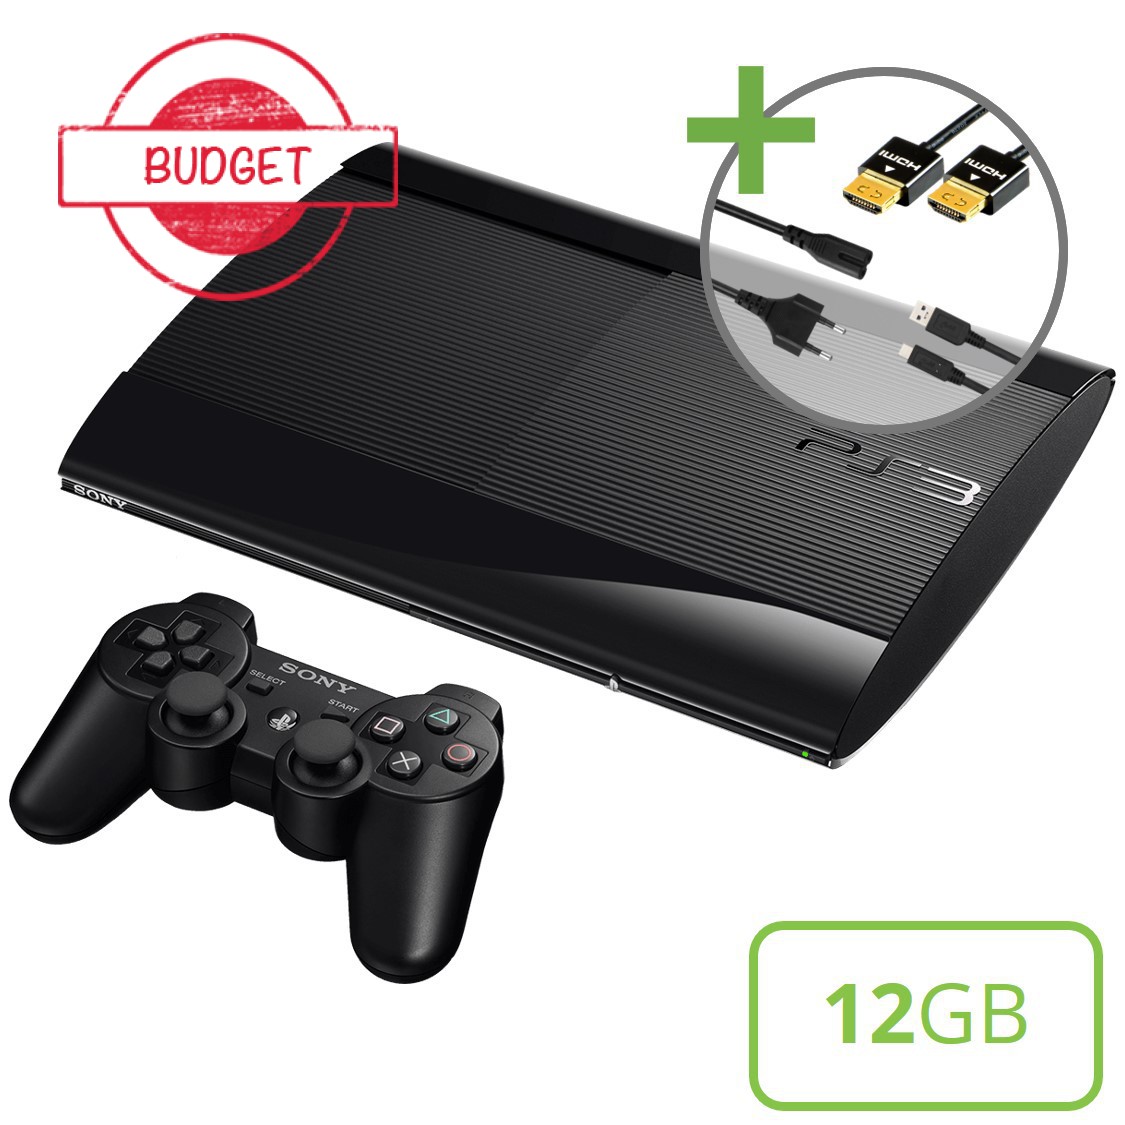 Sony PlayStation 3 Super Slim (12GB) Starter Pack - DualShock Edition - Budget Kopen | Playstation 3 Hardware